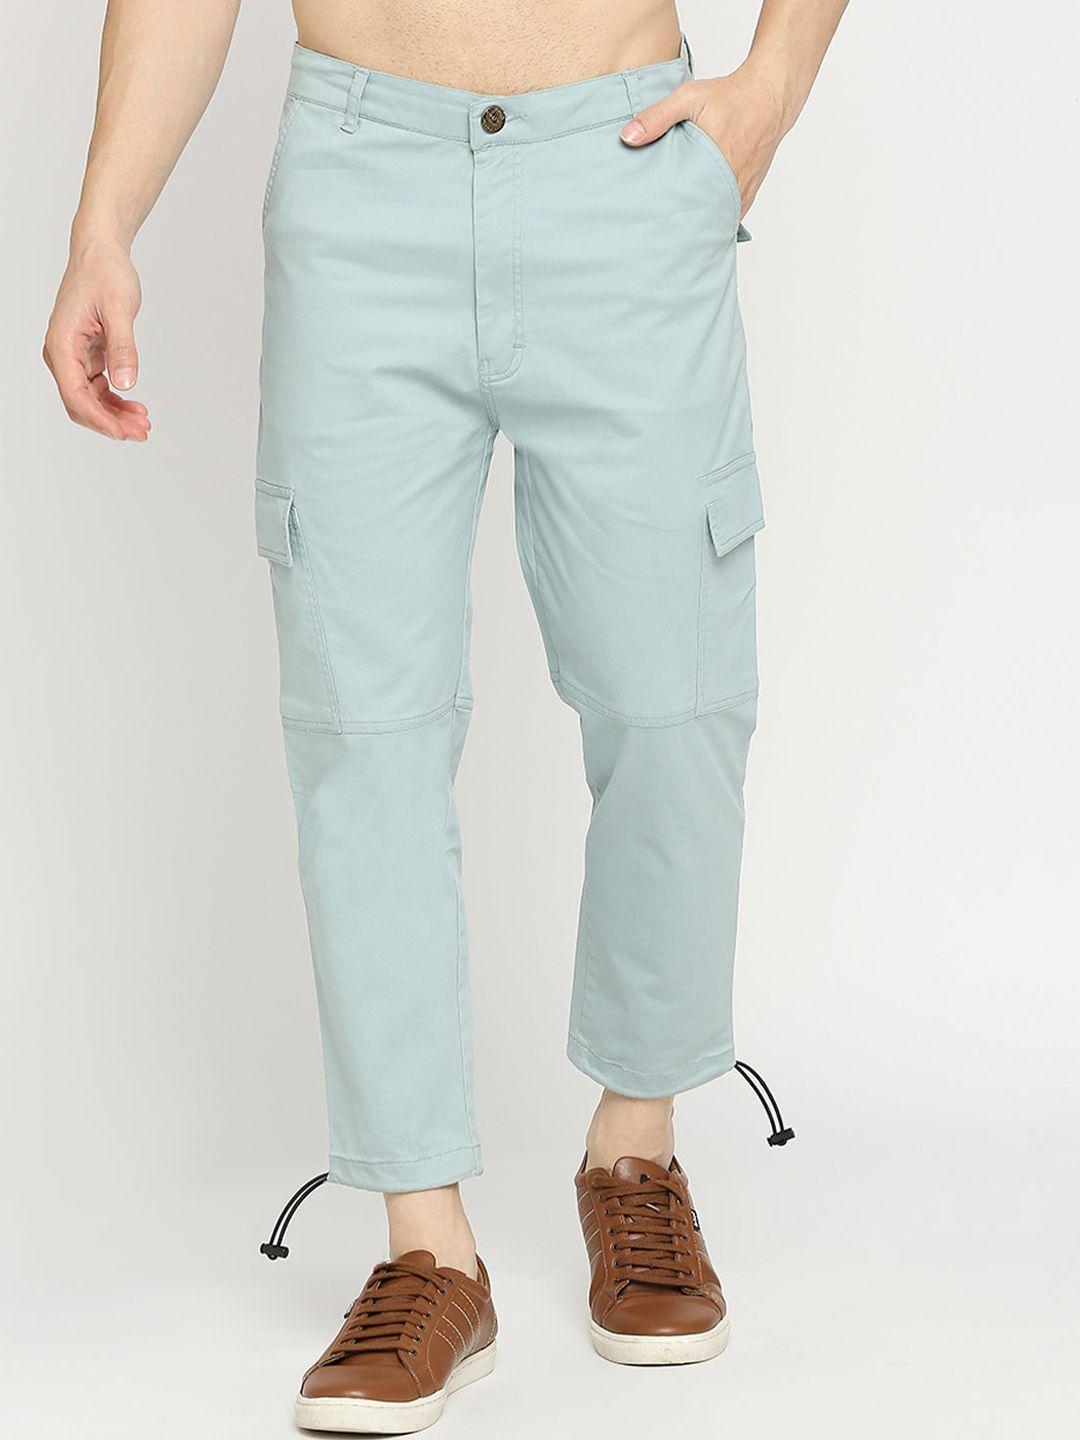 blamblack men comfort cotton cargos trousers